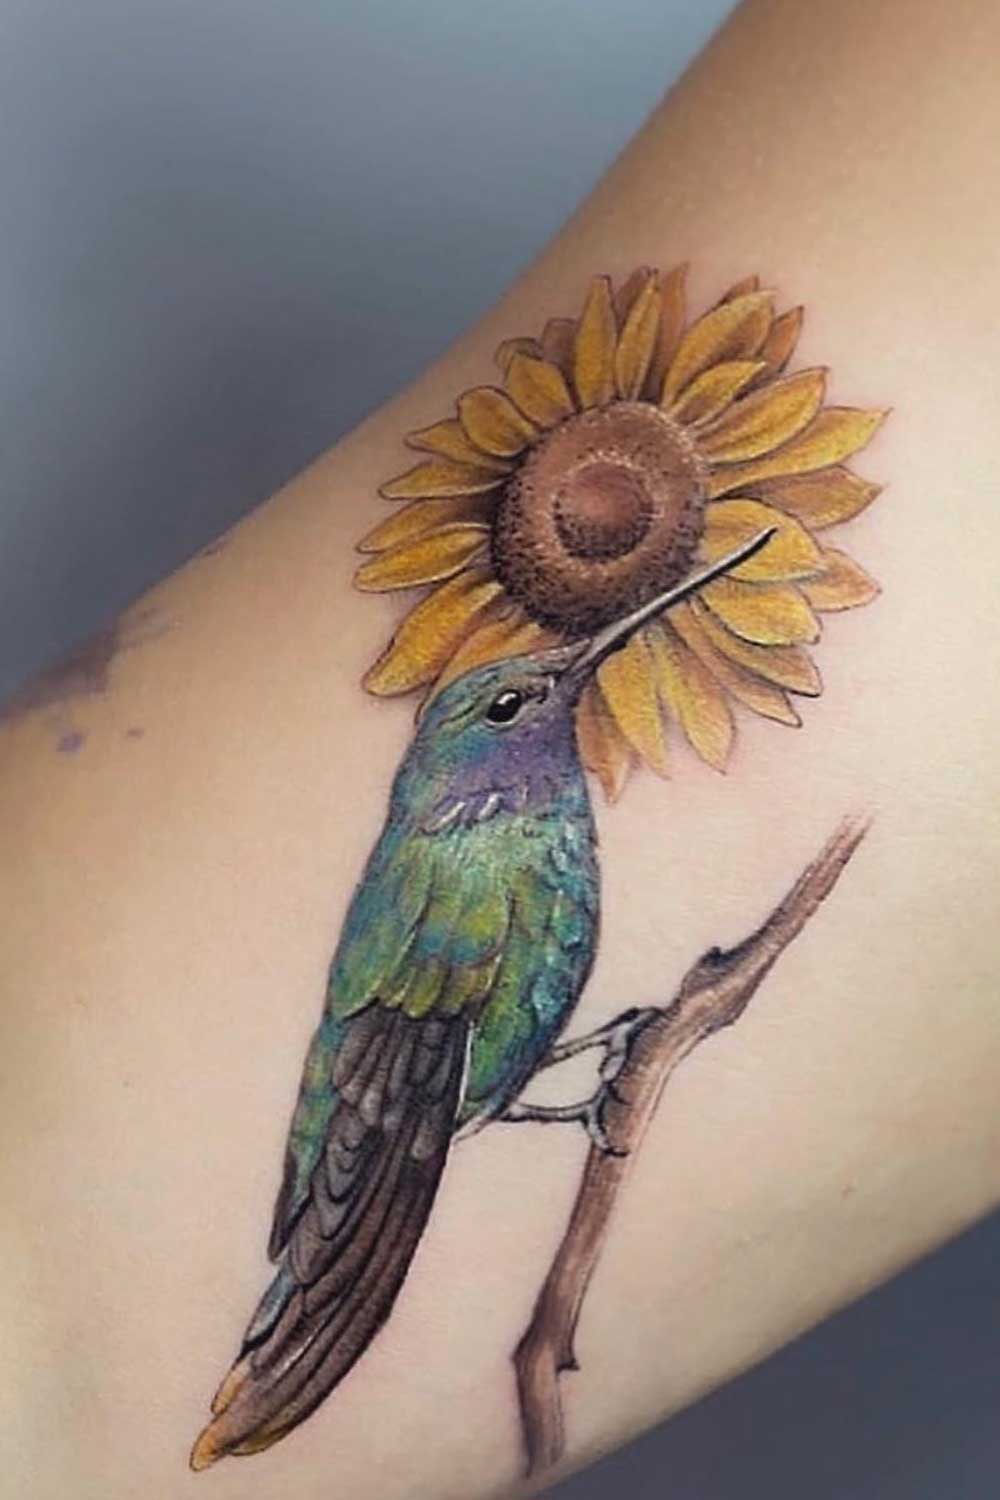 Calibri Bird with a Sunflower